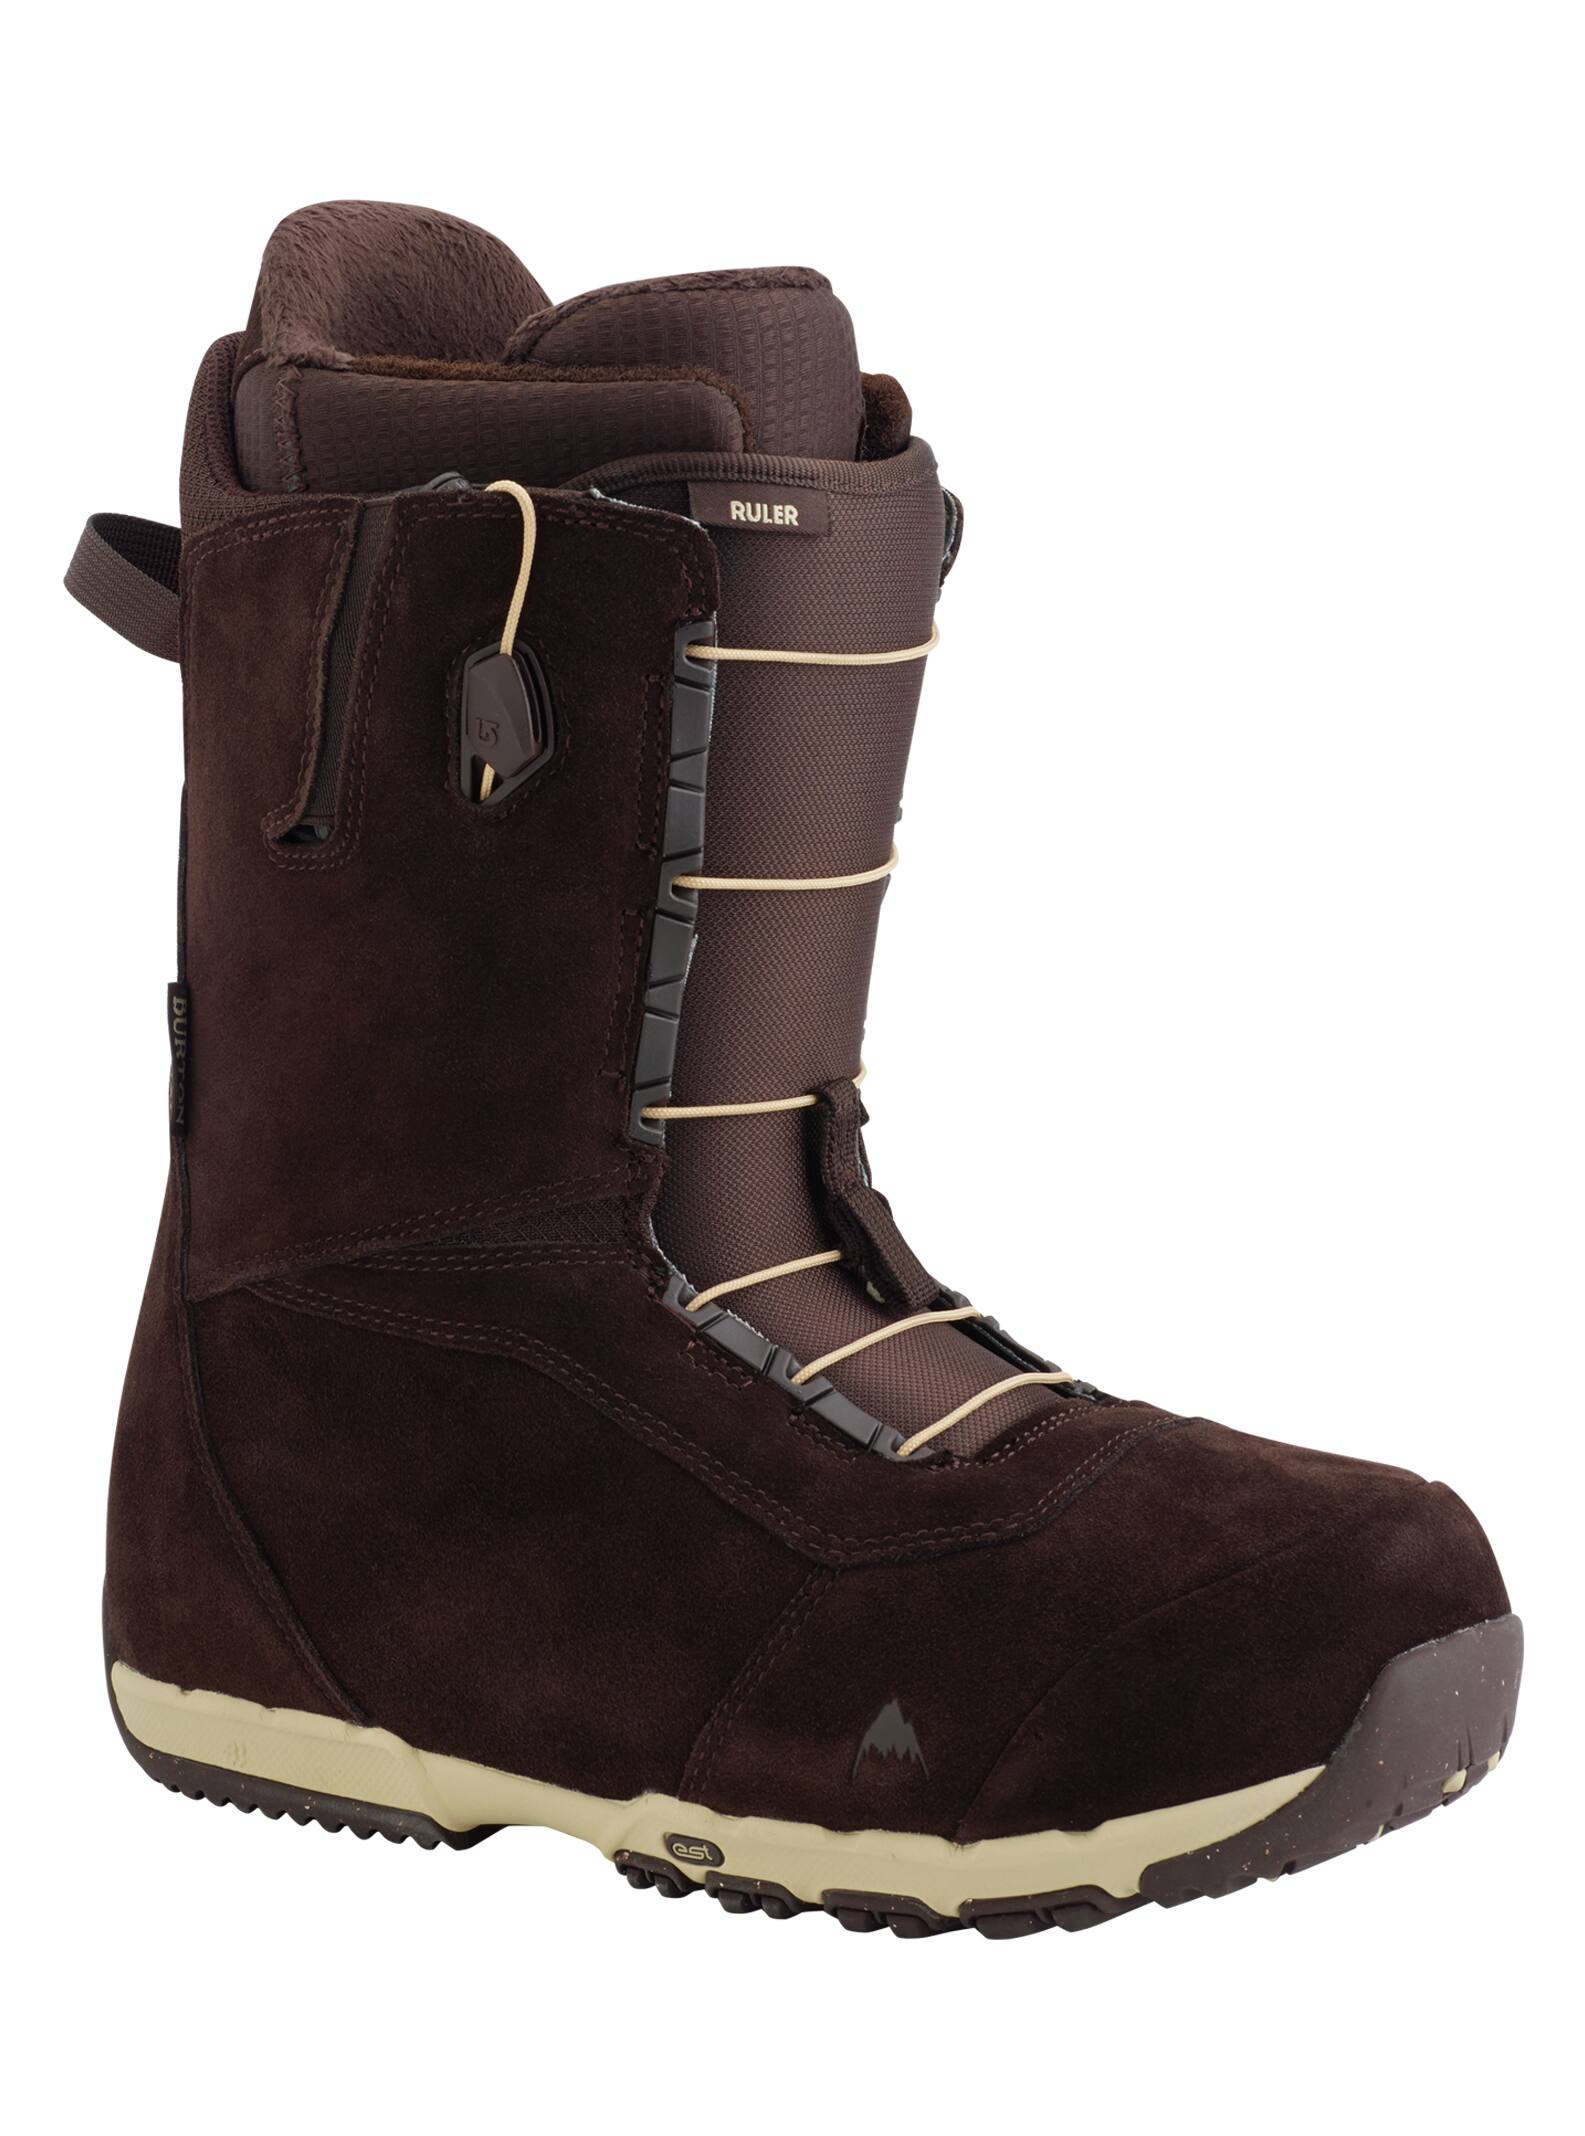 Burton - Boots de snowboard Ruler Leather homme, Brown, 10